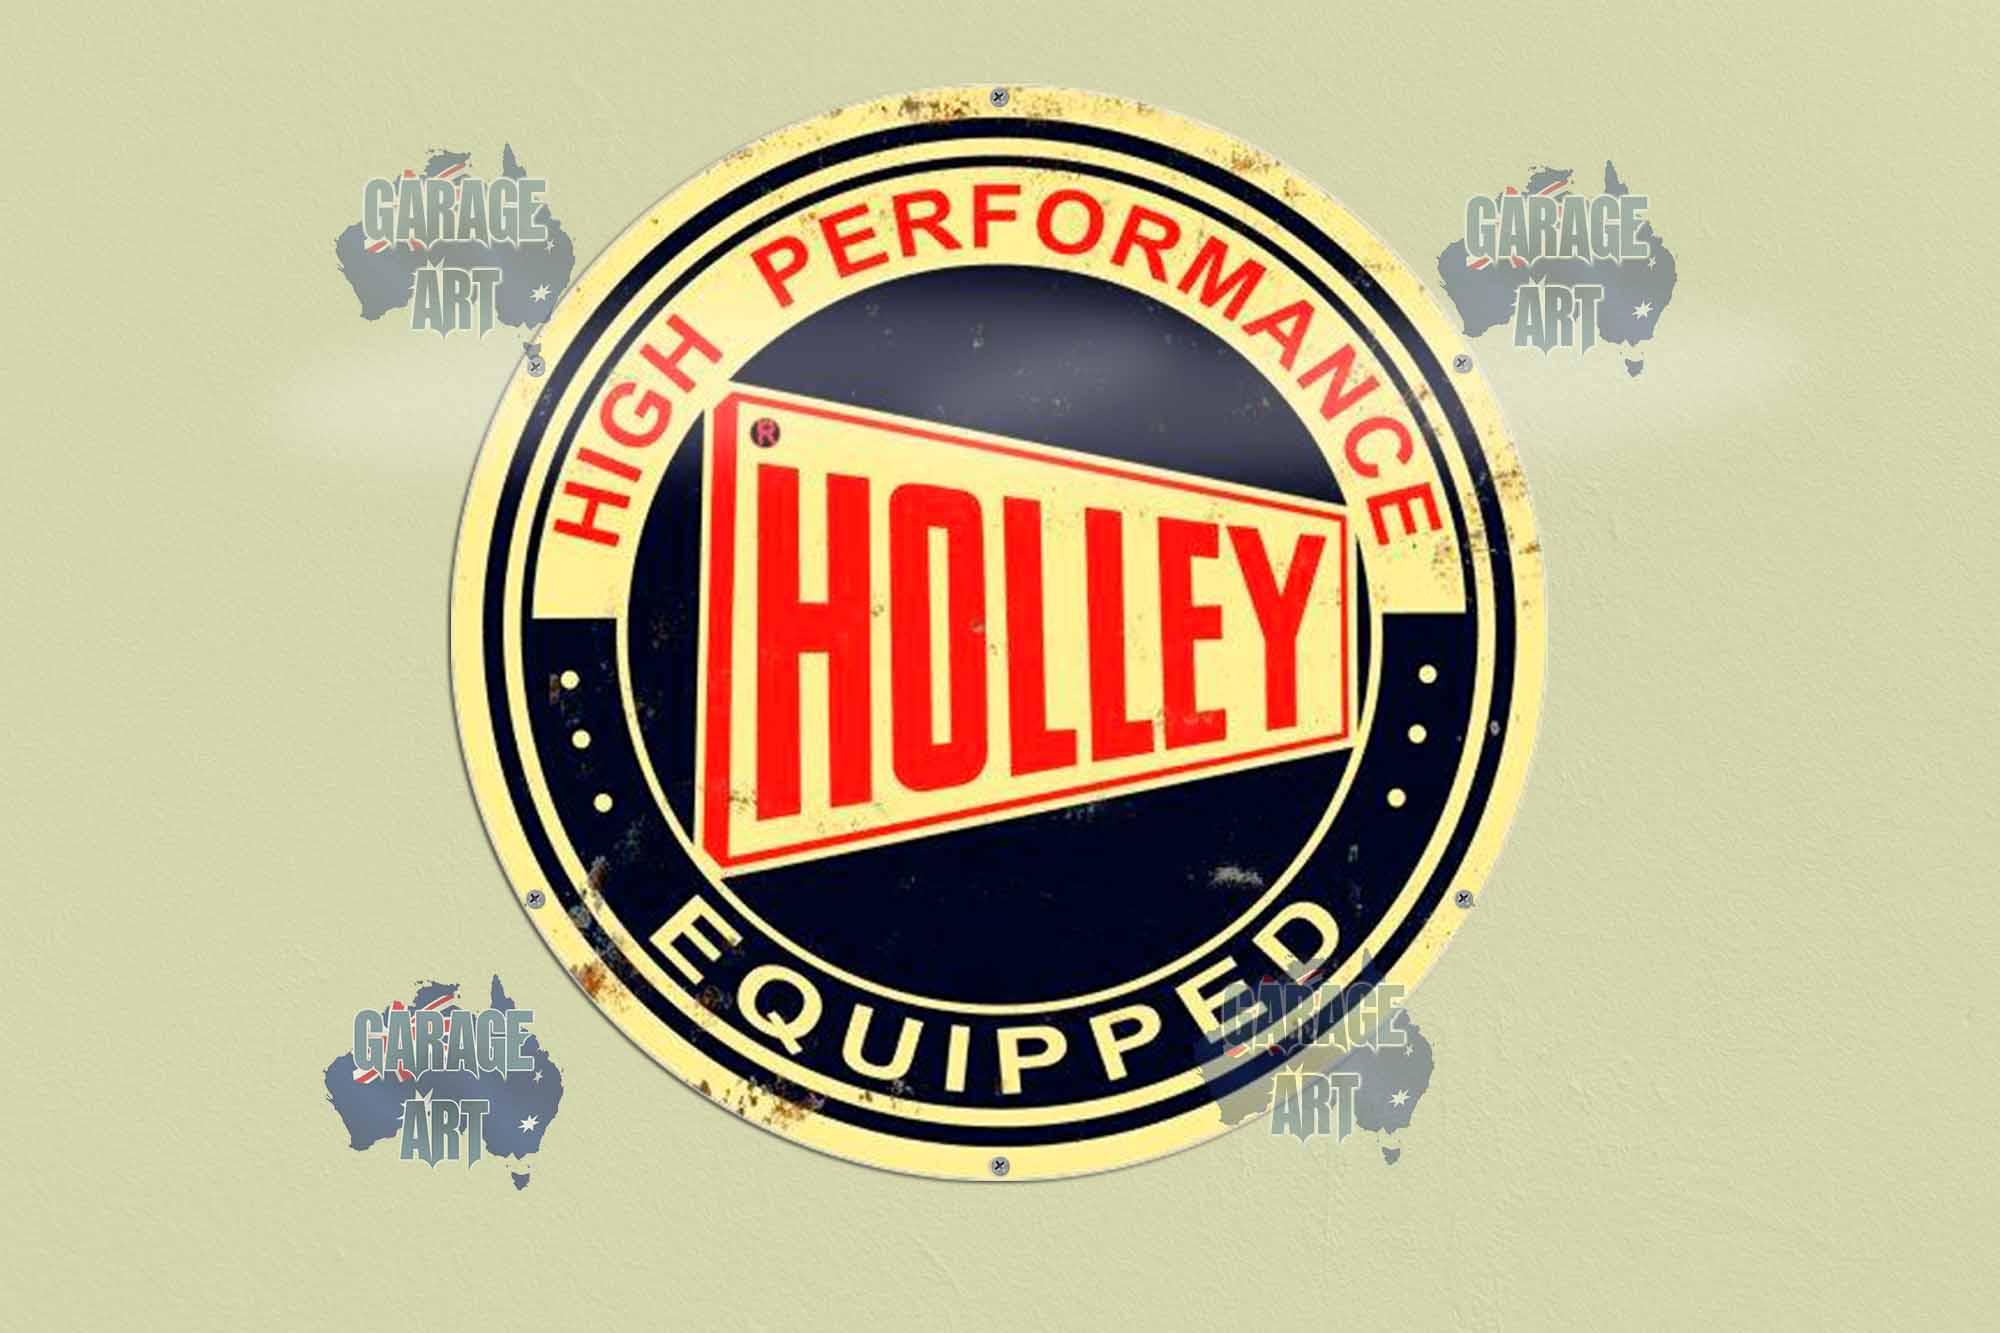 Holley Carburettors High Performance 560Dia Tin Sign freeshipping - garageartaustralia